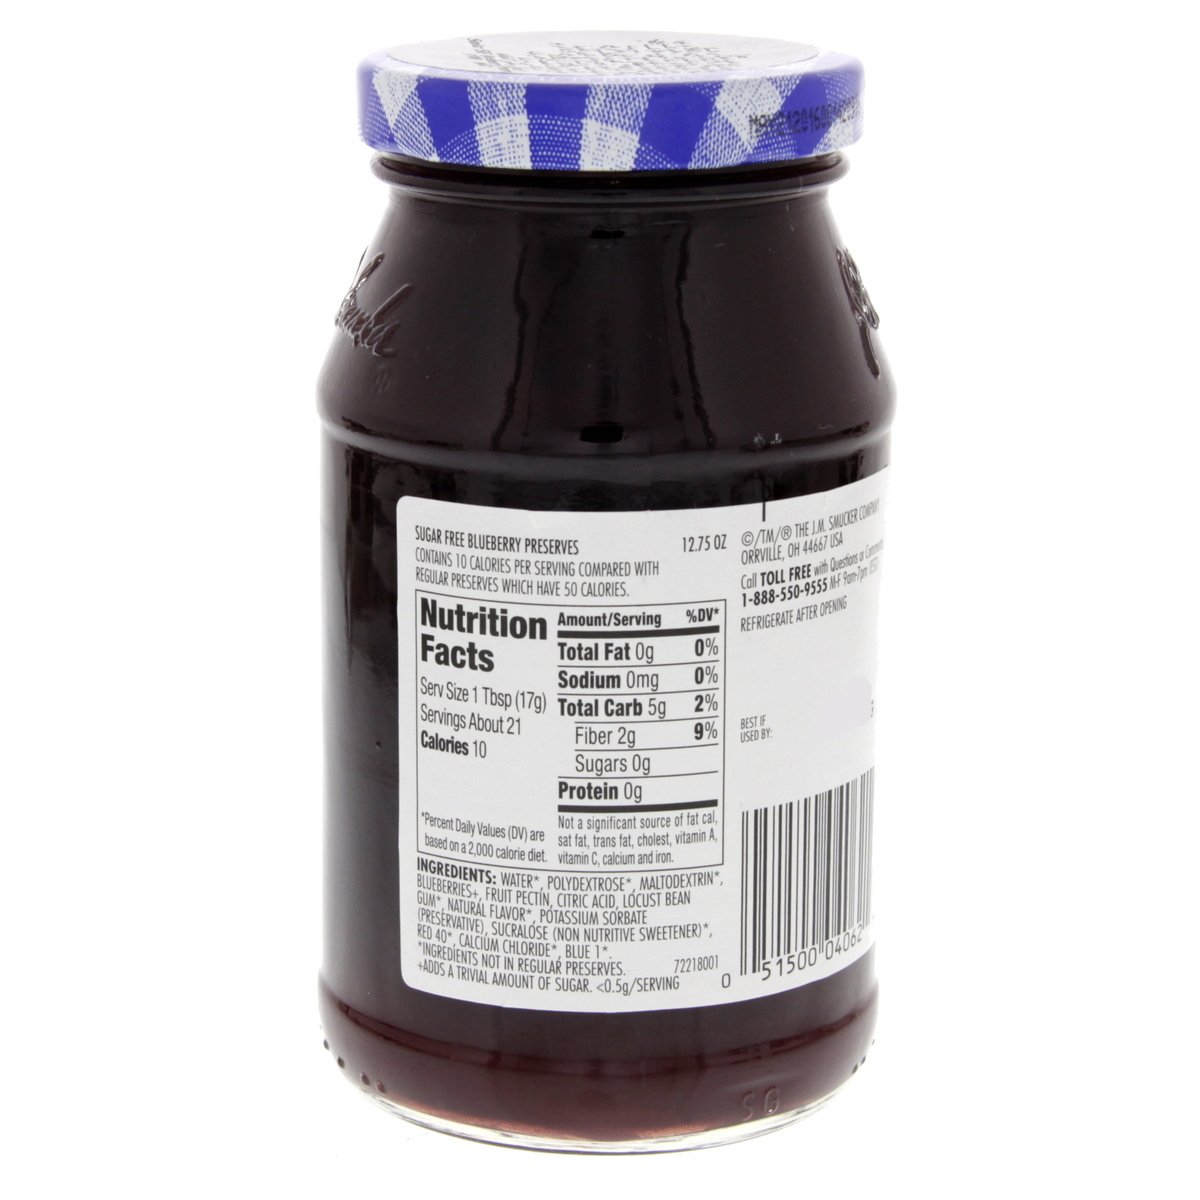 Smucker's Sugar Free Blueberry Preserves 361 g